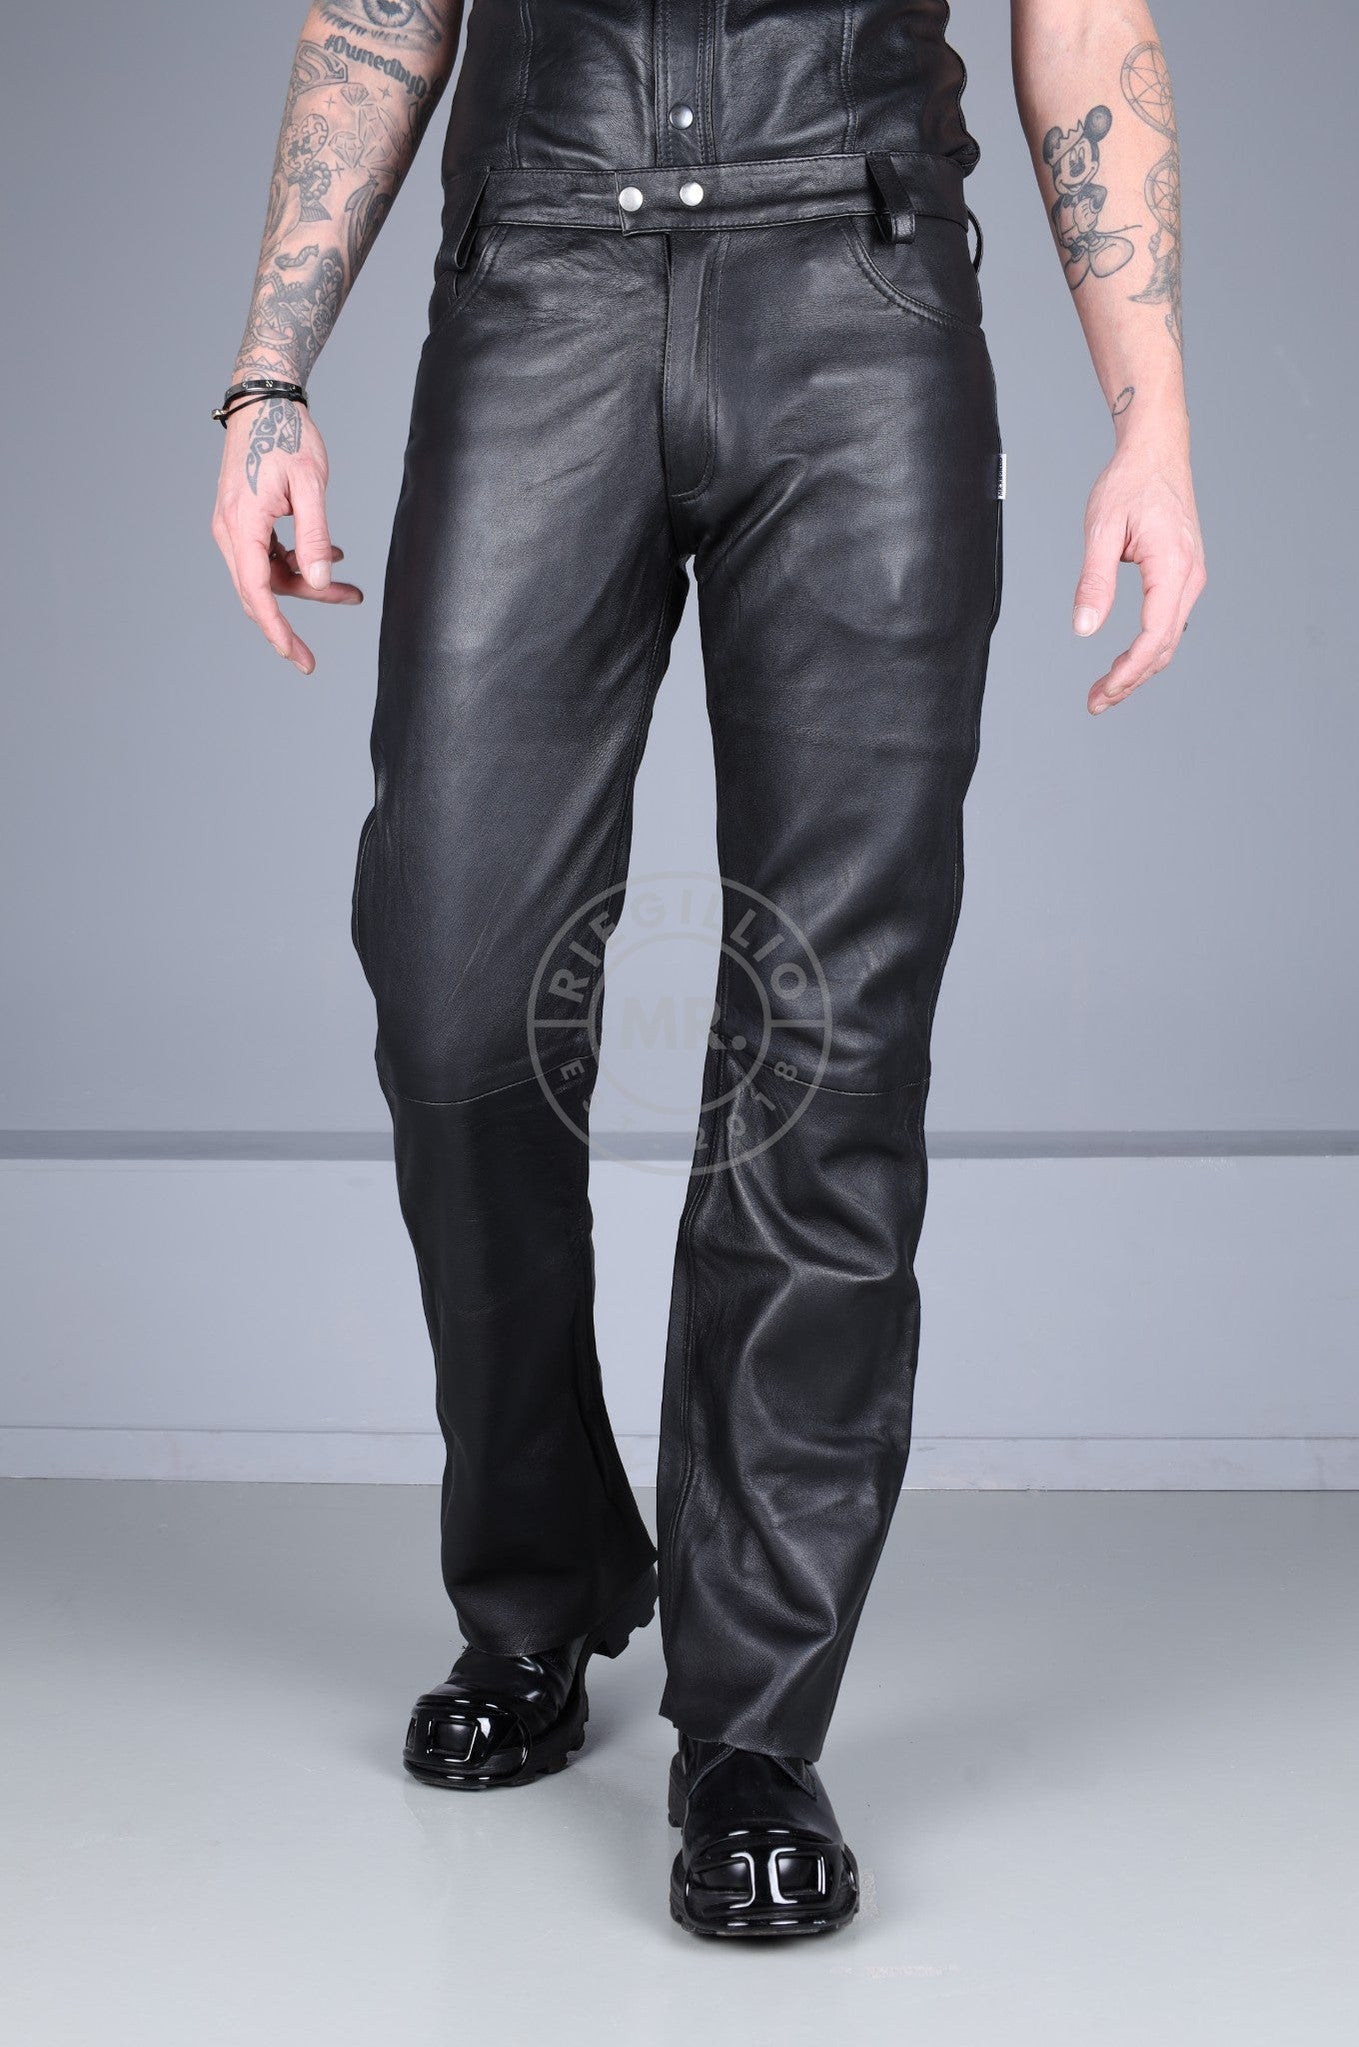 Black Leather Bootcut Pants at MR. Riegillio